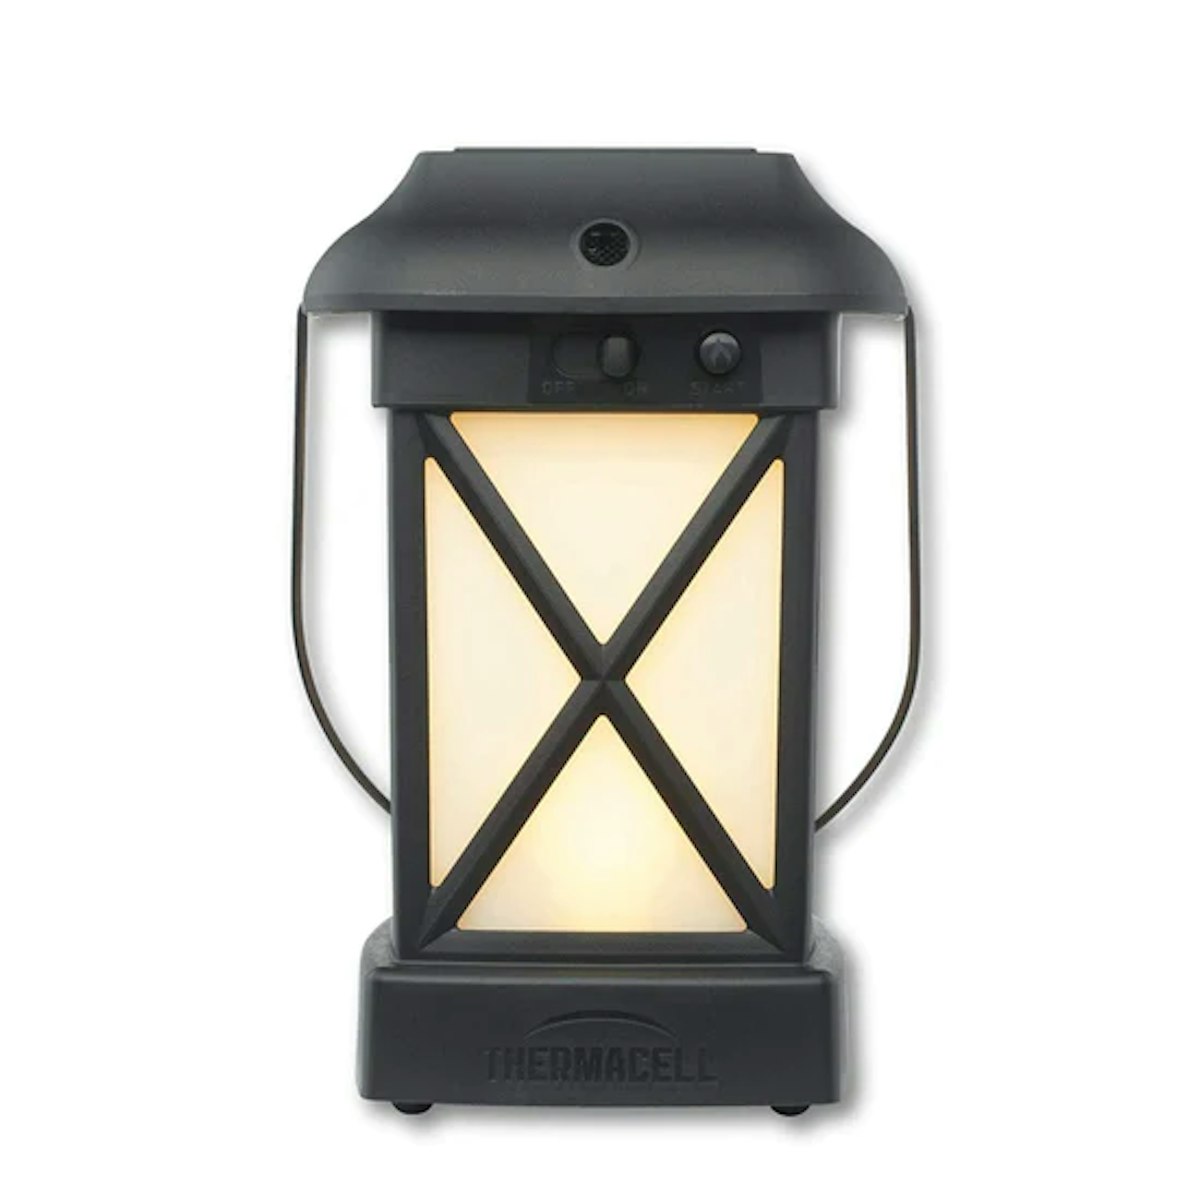 A black lantern with a light on it.